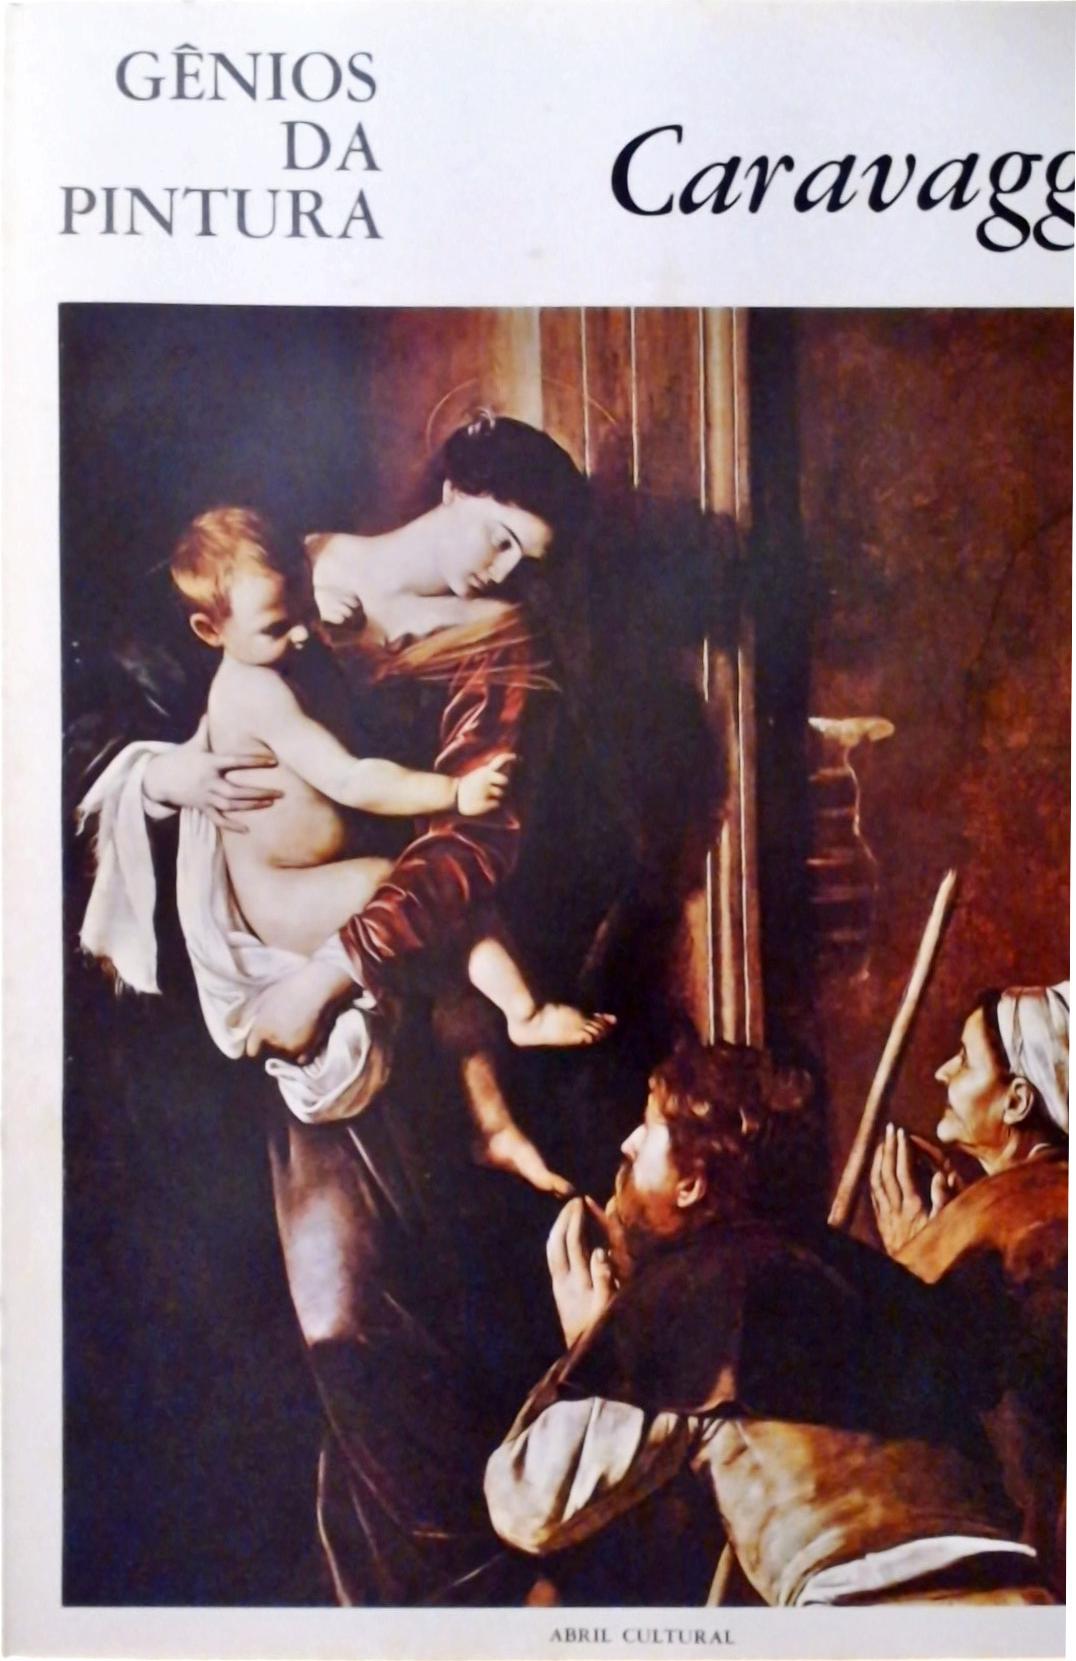 Gênios da Pintura - Caravaggio